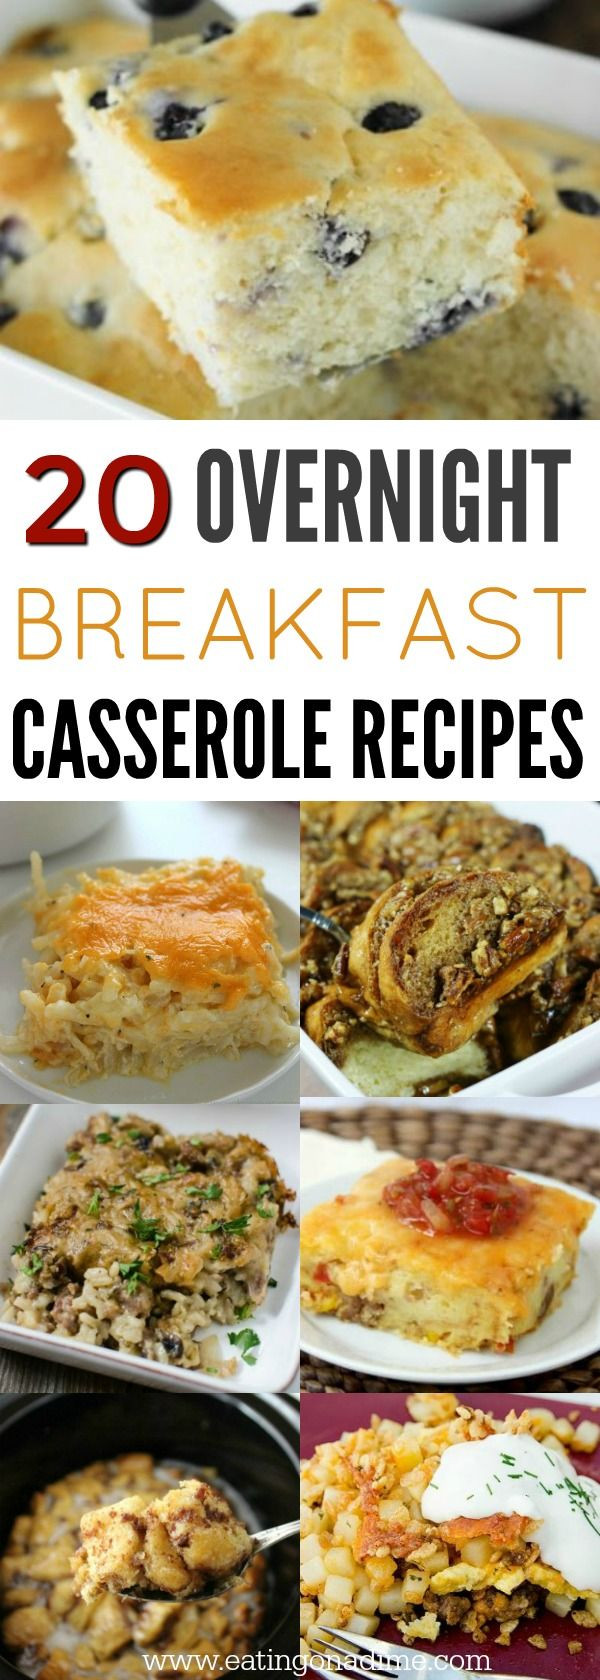 Healthy Make Ahead Breakfast Recipes
 Tasty Make ahead breakfast recipes on Pinterest